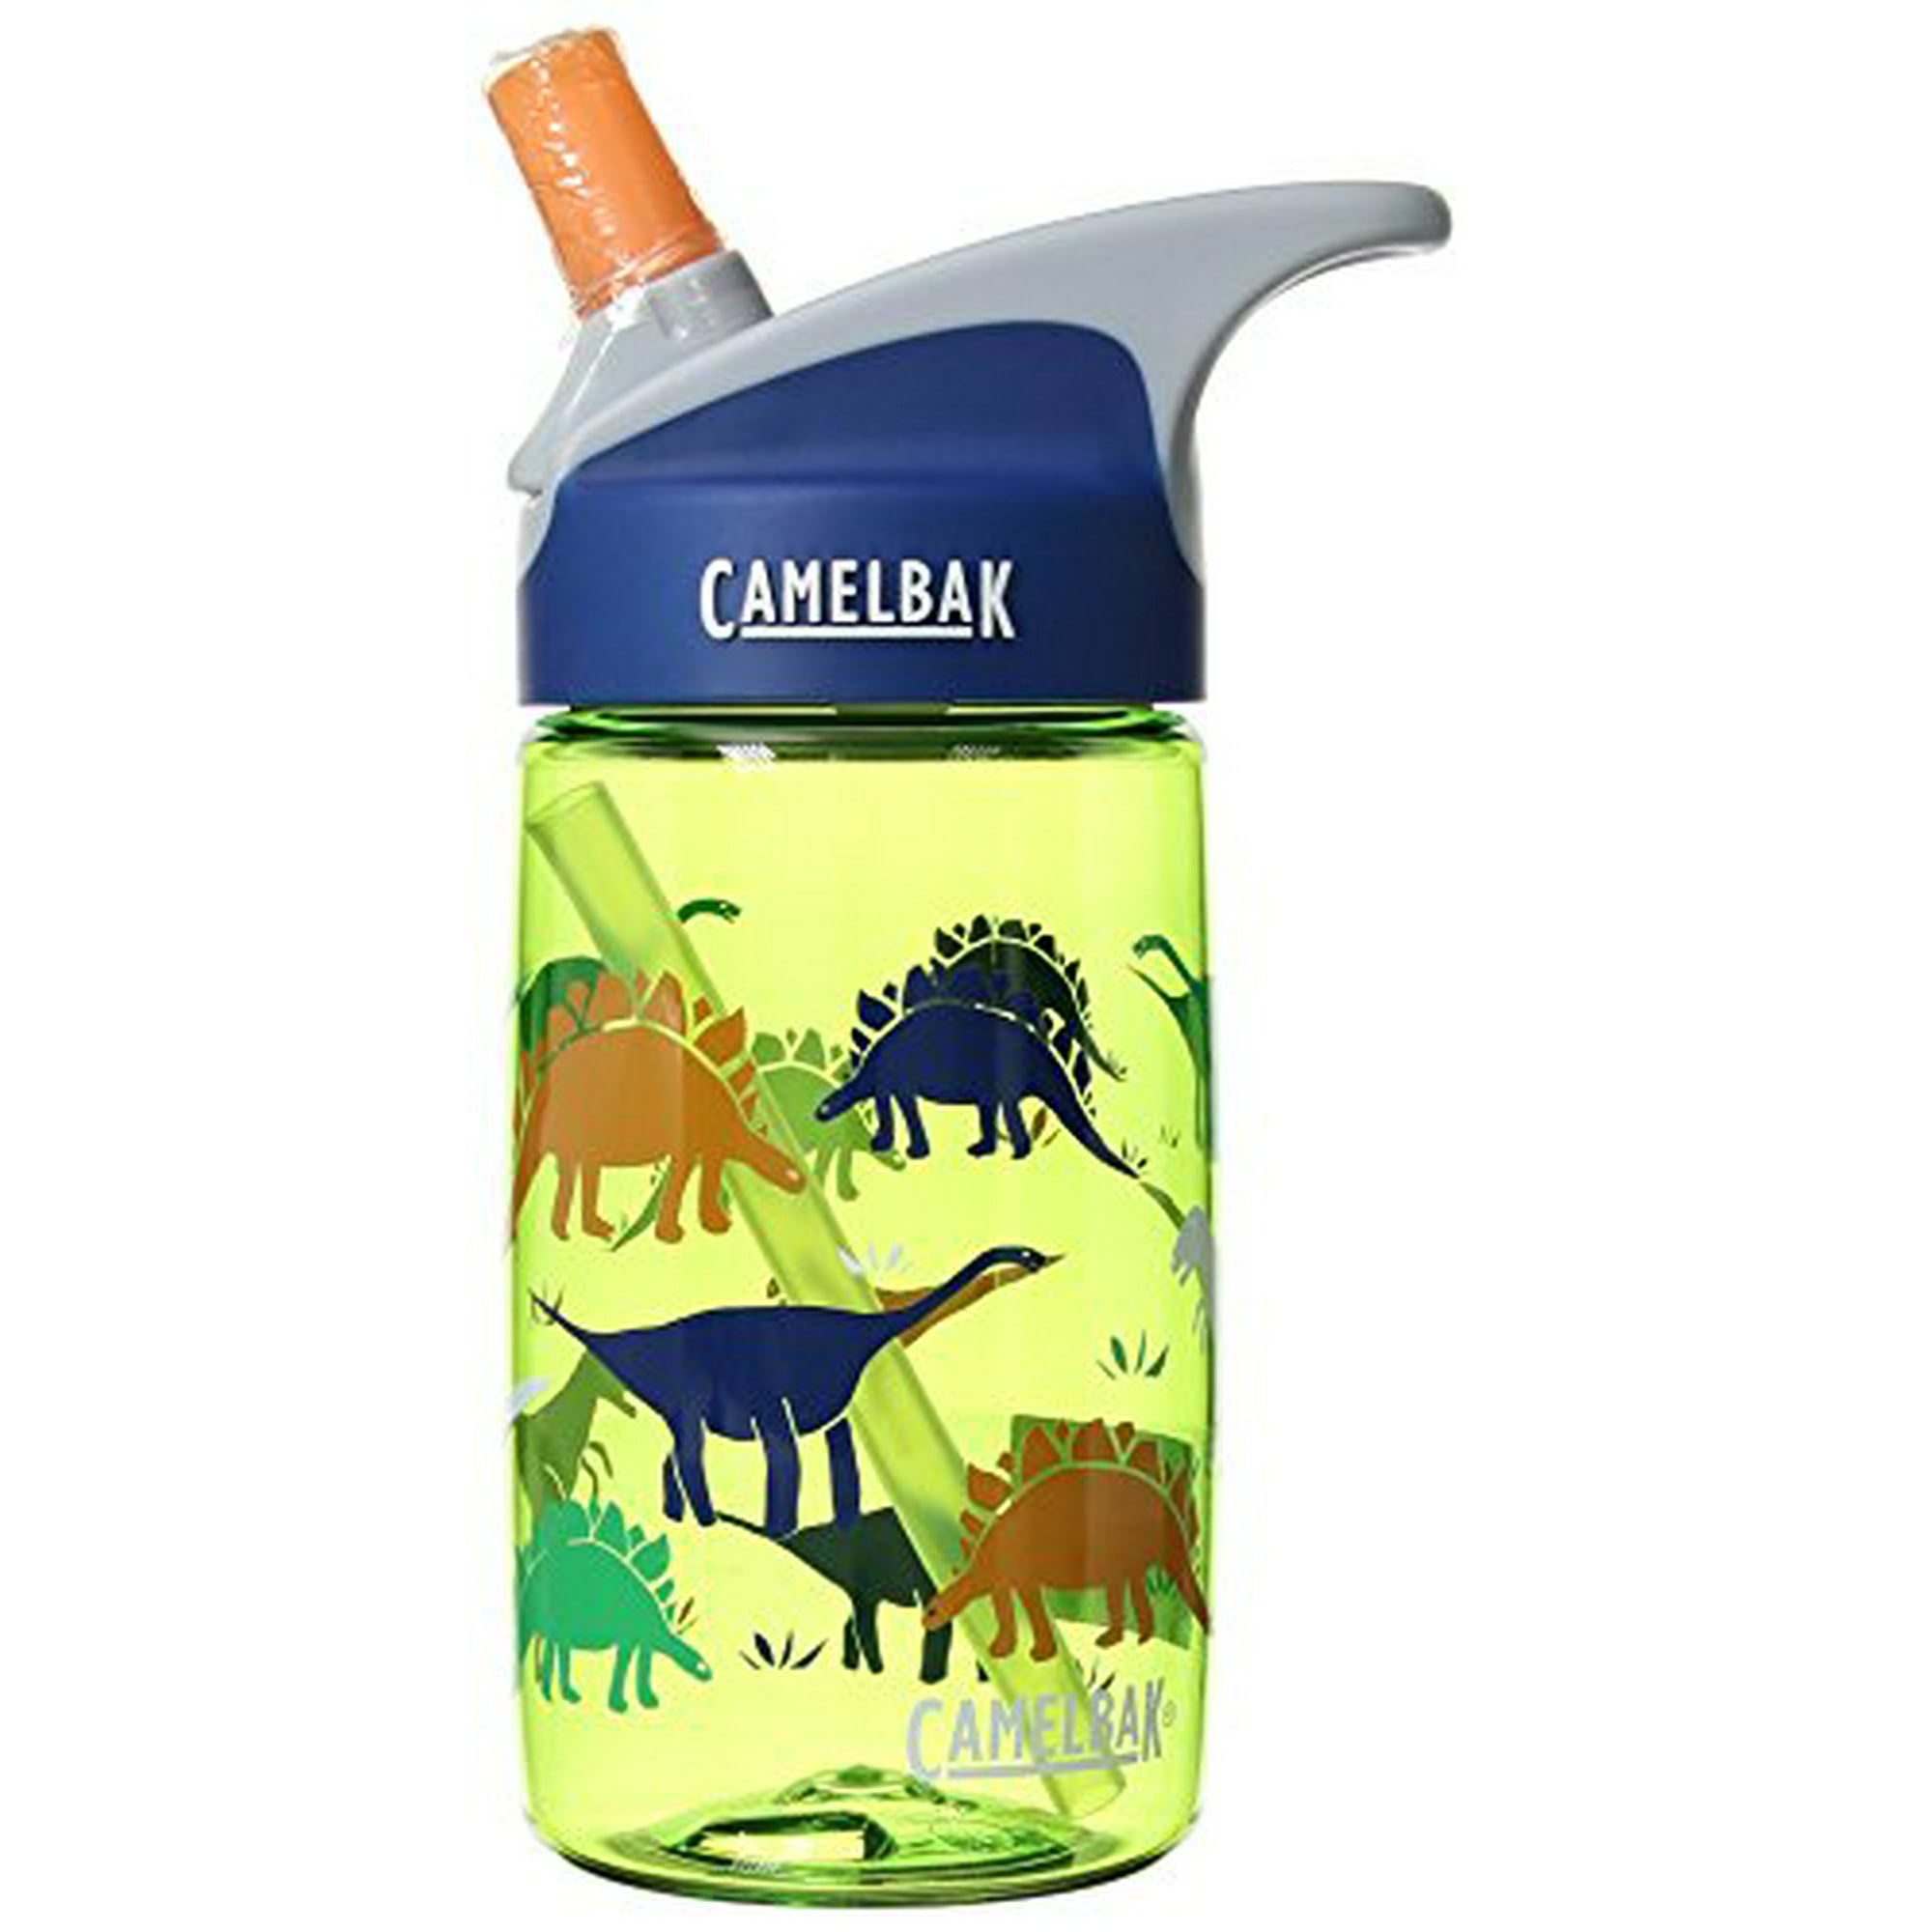 CamelBak Eddy Kids .4L Water Bottle Magical Mermaids 1274401040 